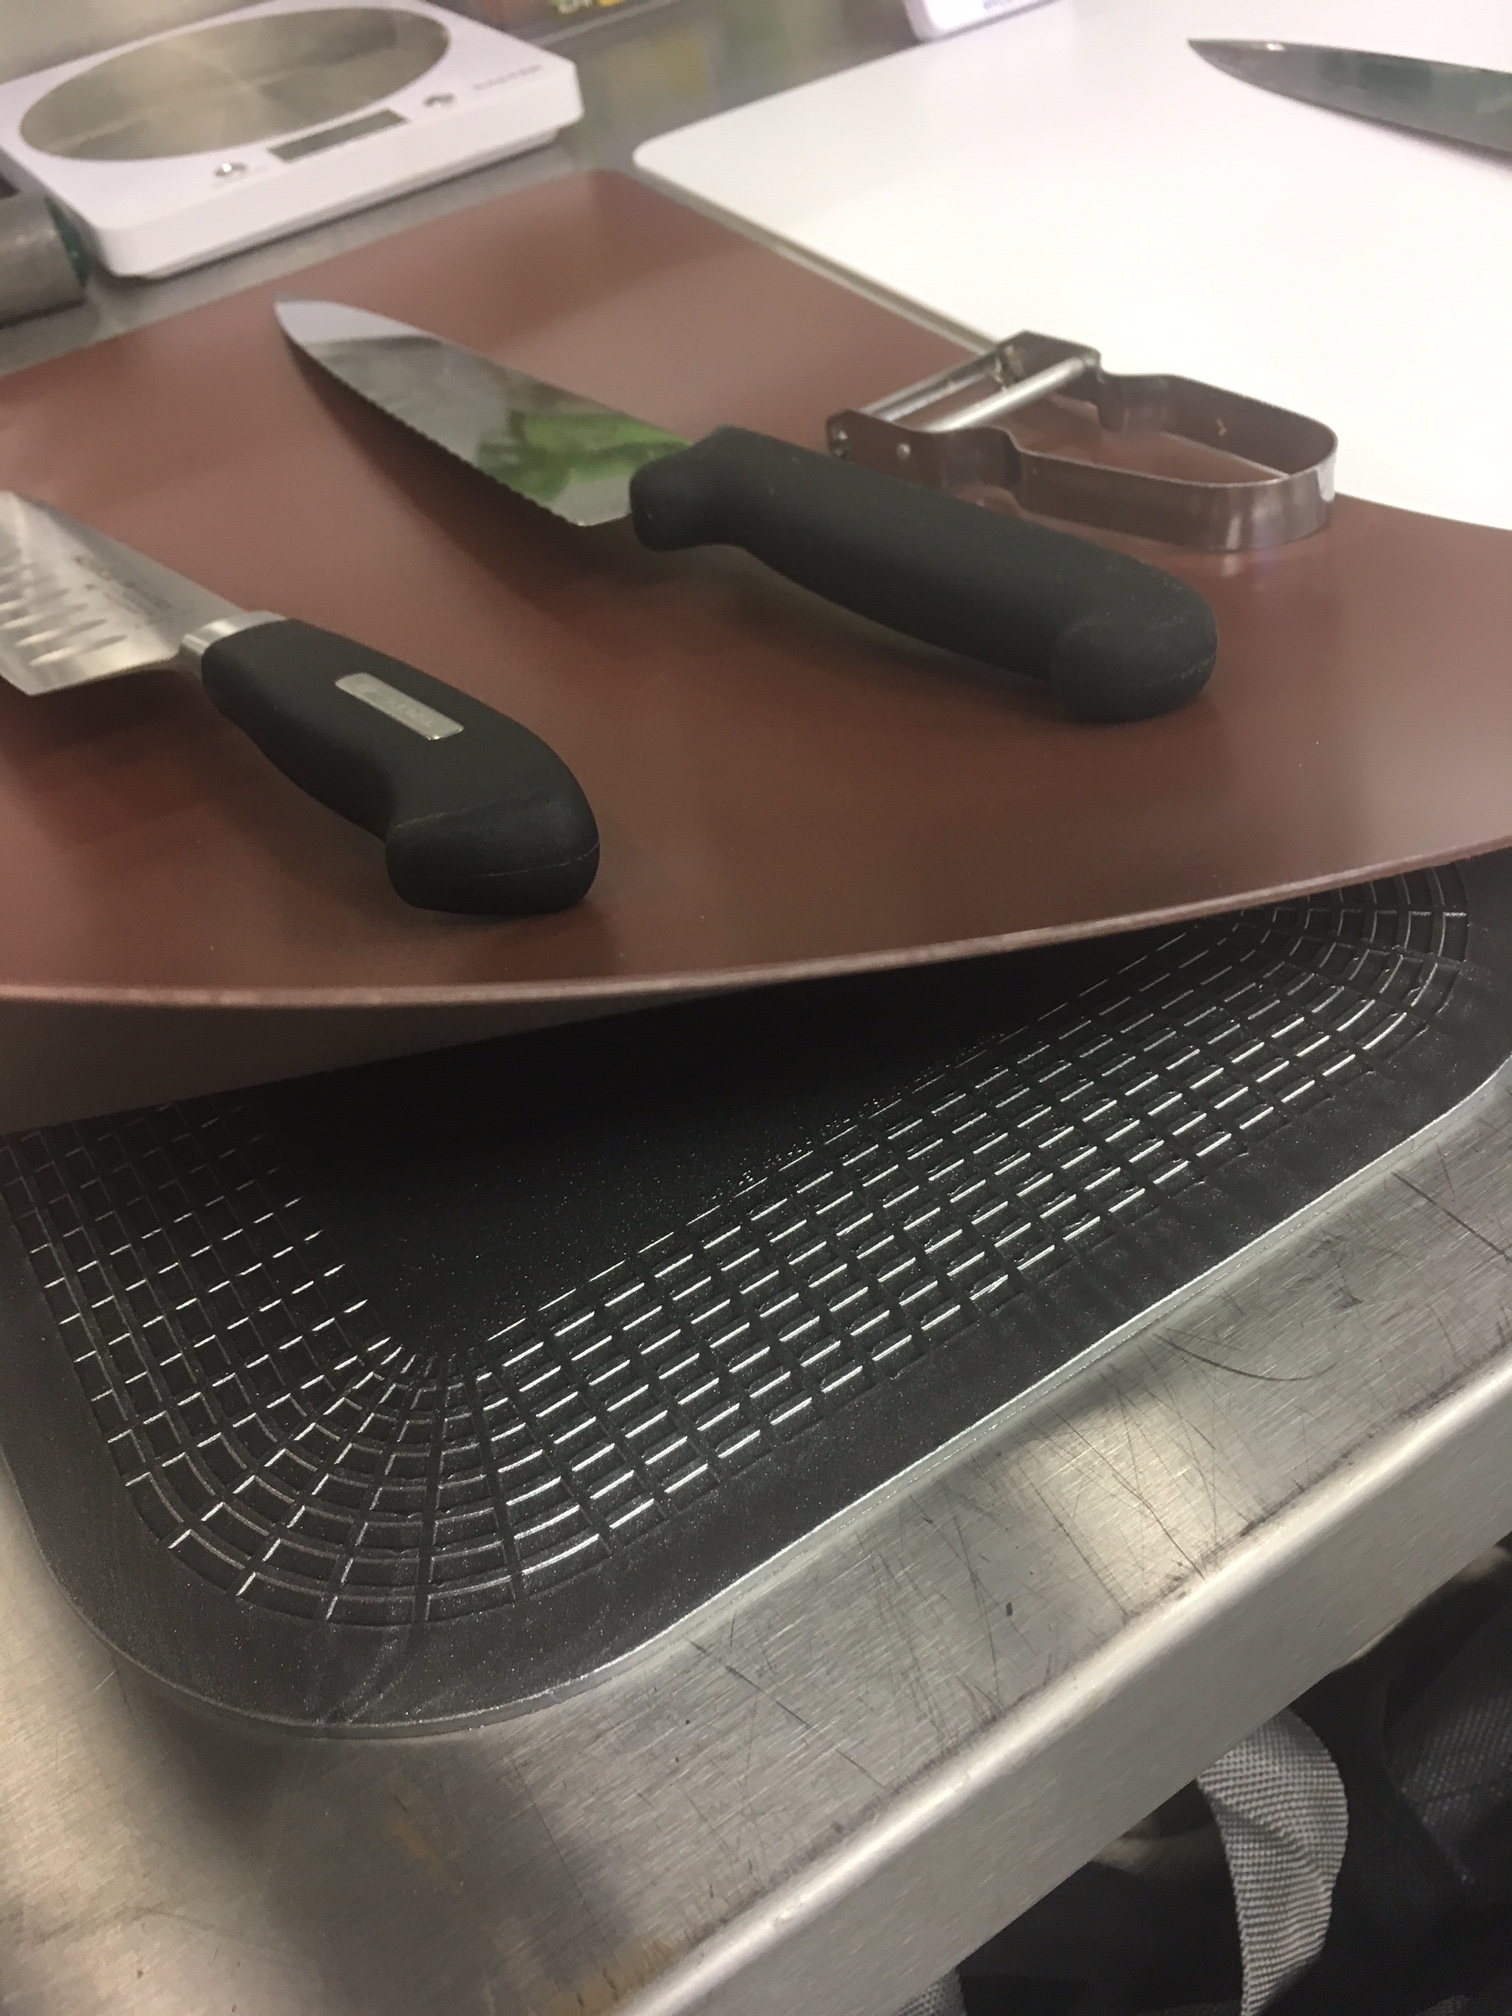 Chef uses Dycem Non-Slip Mat under chopping board - Dycem Non Slip - Blog